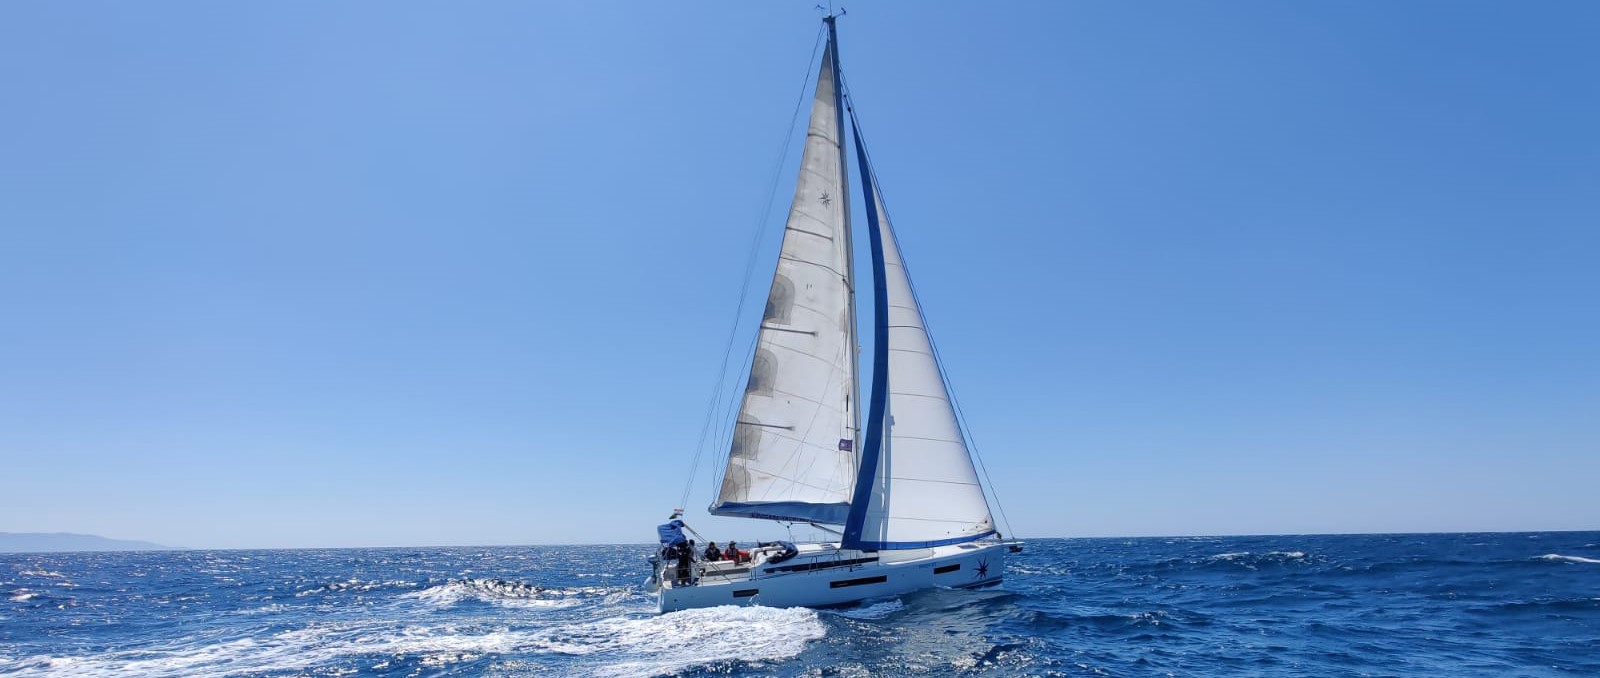 Beginner sailing course in Croatia